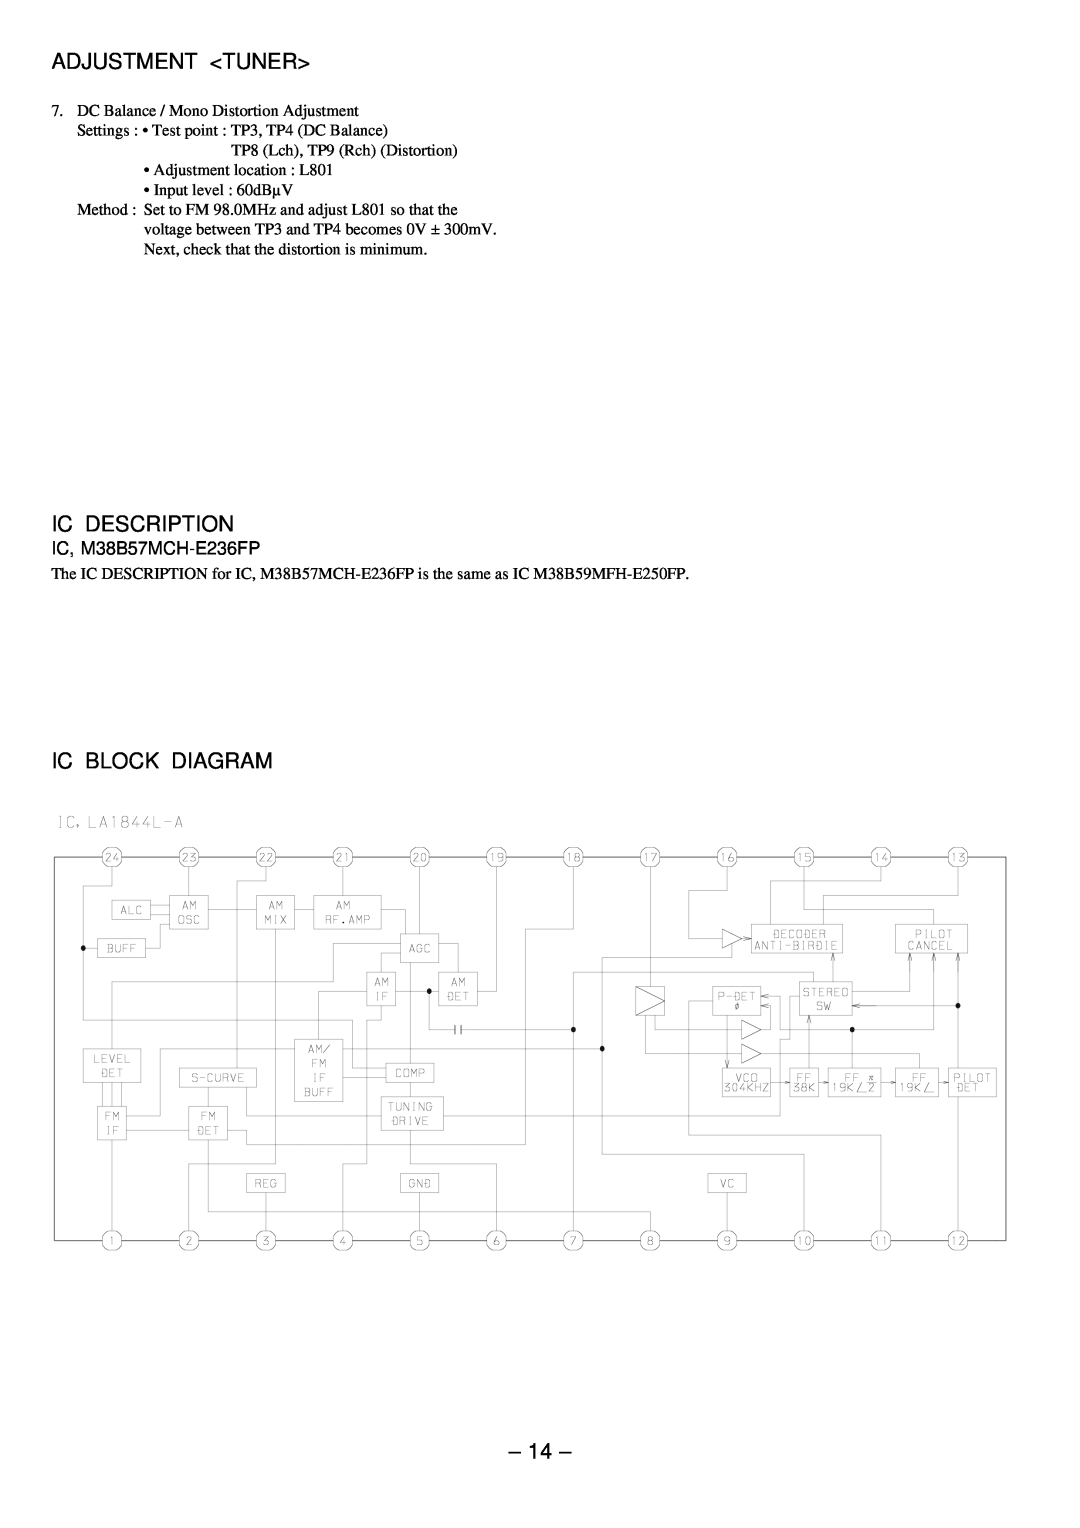 Aiwa Z-L200 service manual Adjustment Tuner, Ic Description, Ic Block Diagram, IC, M38B57MCH-E236FP 